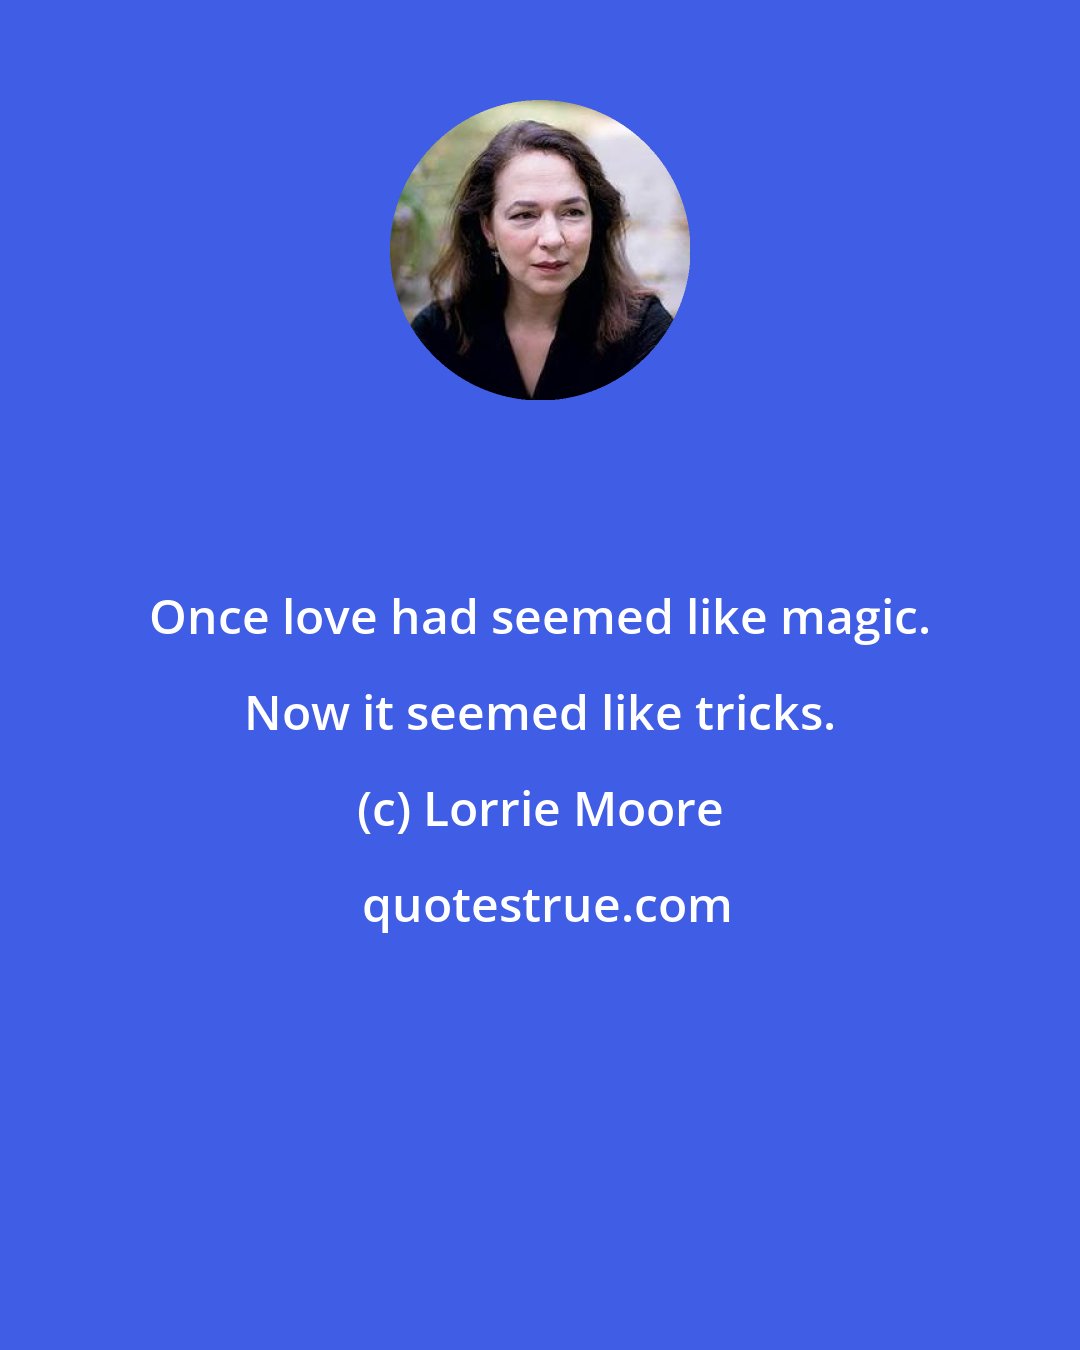 Lorrie Moore: Once love had seemed like magic. Now it seemed like tricks.